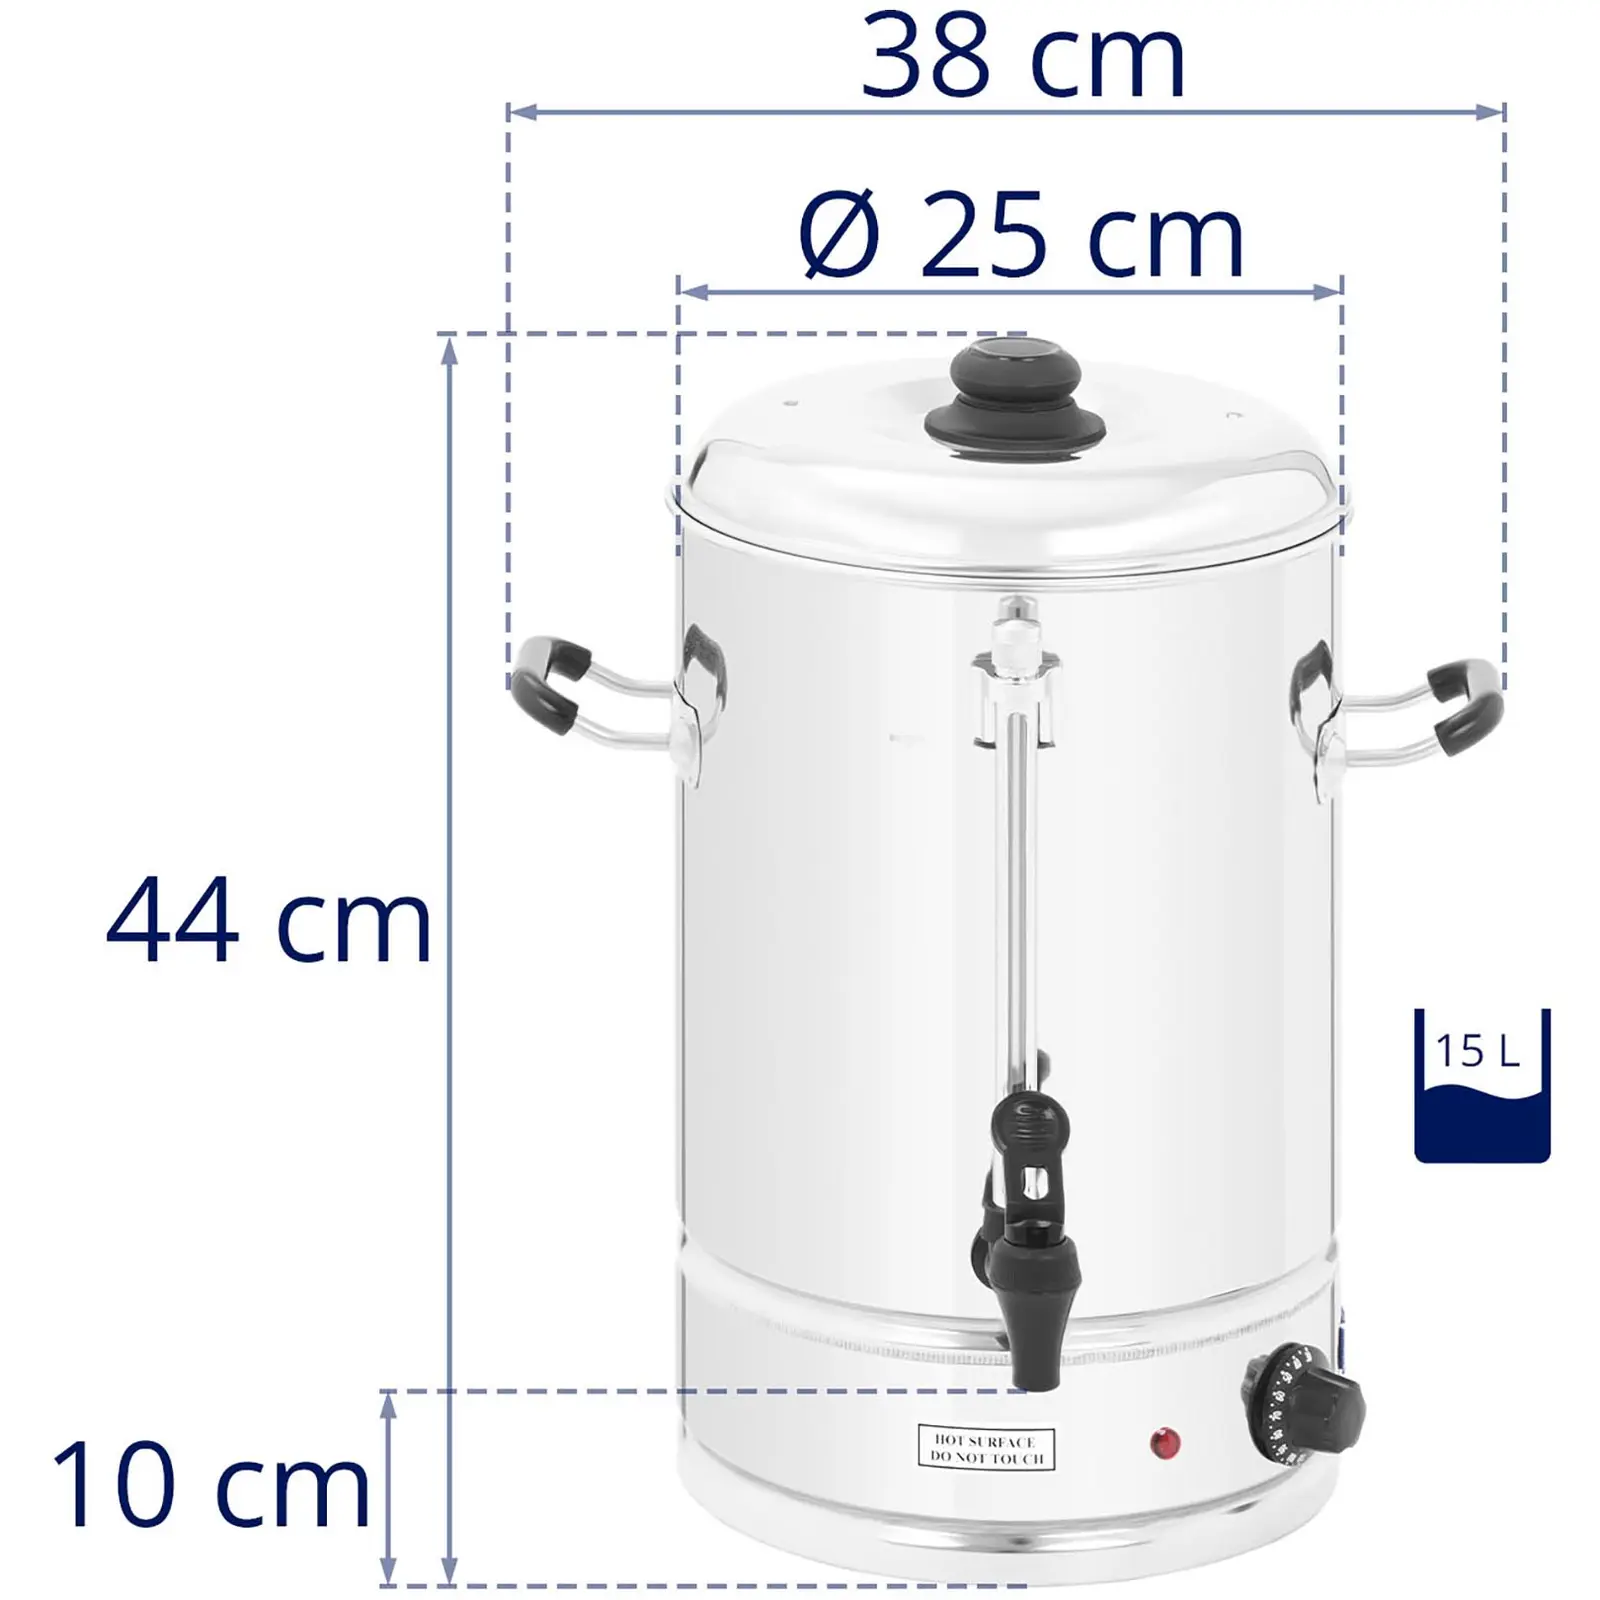 Hot Water Dispenser - 15 L - stainless steel	